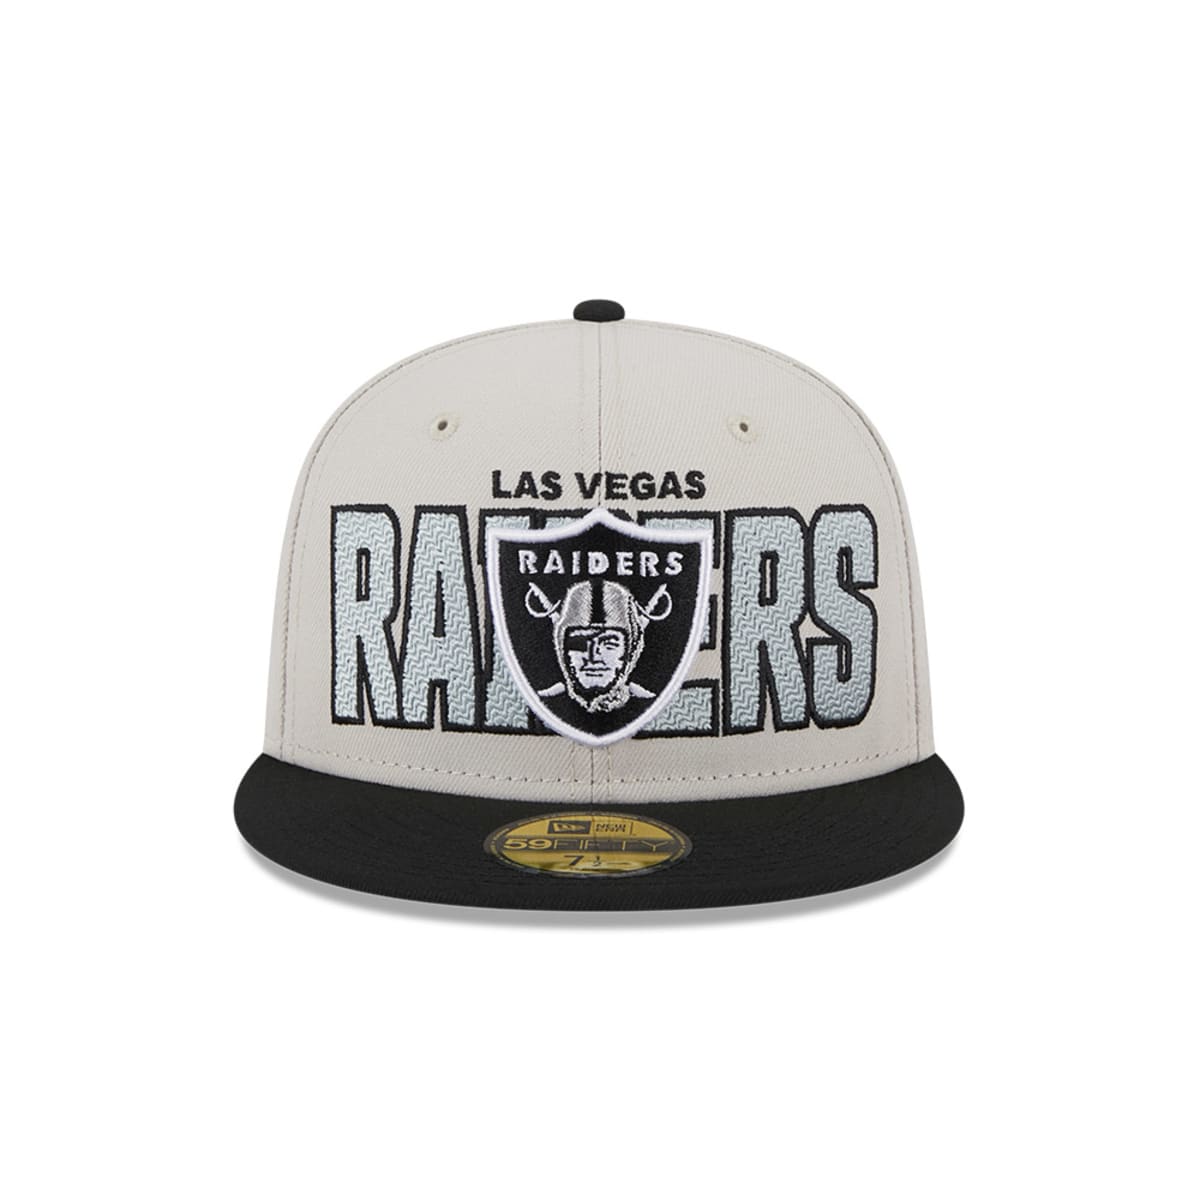 Official Las Vegas Raiders Merchandise Goes On Sale When NFL Draft Hits Las  Vegas April 23-25; Team Officially Declared Las Vegas Raiders Wednesday -  LVSportsBiz